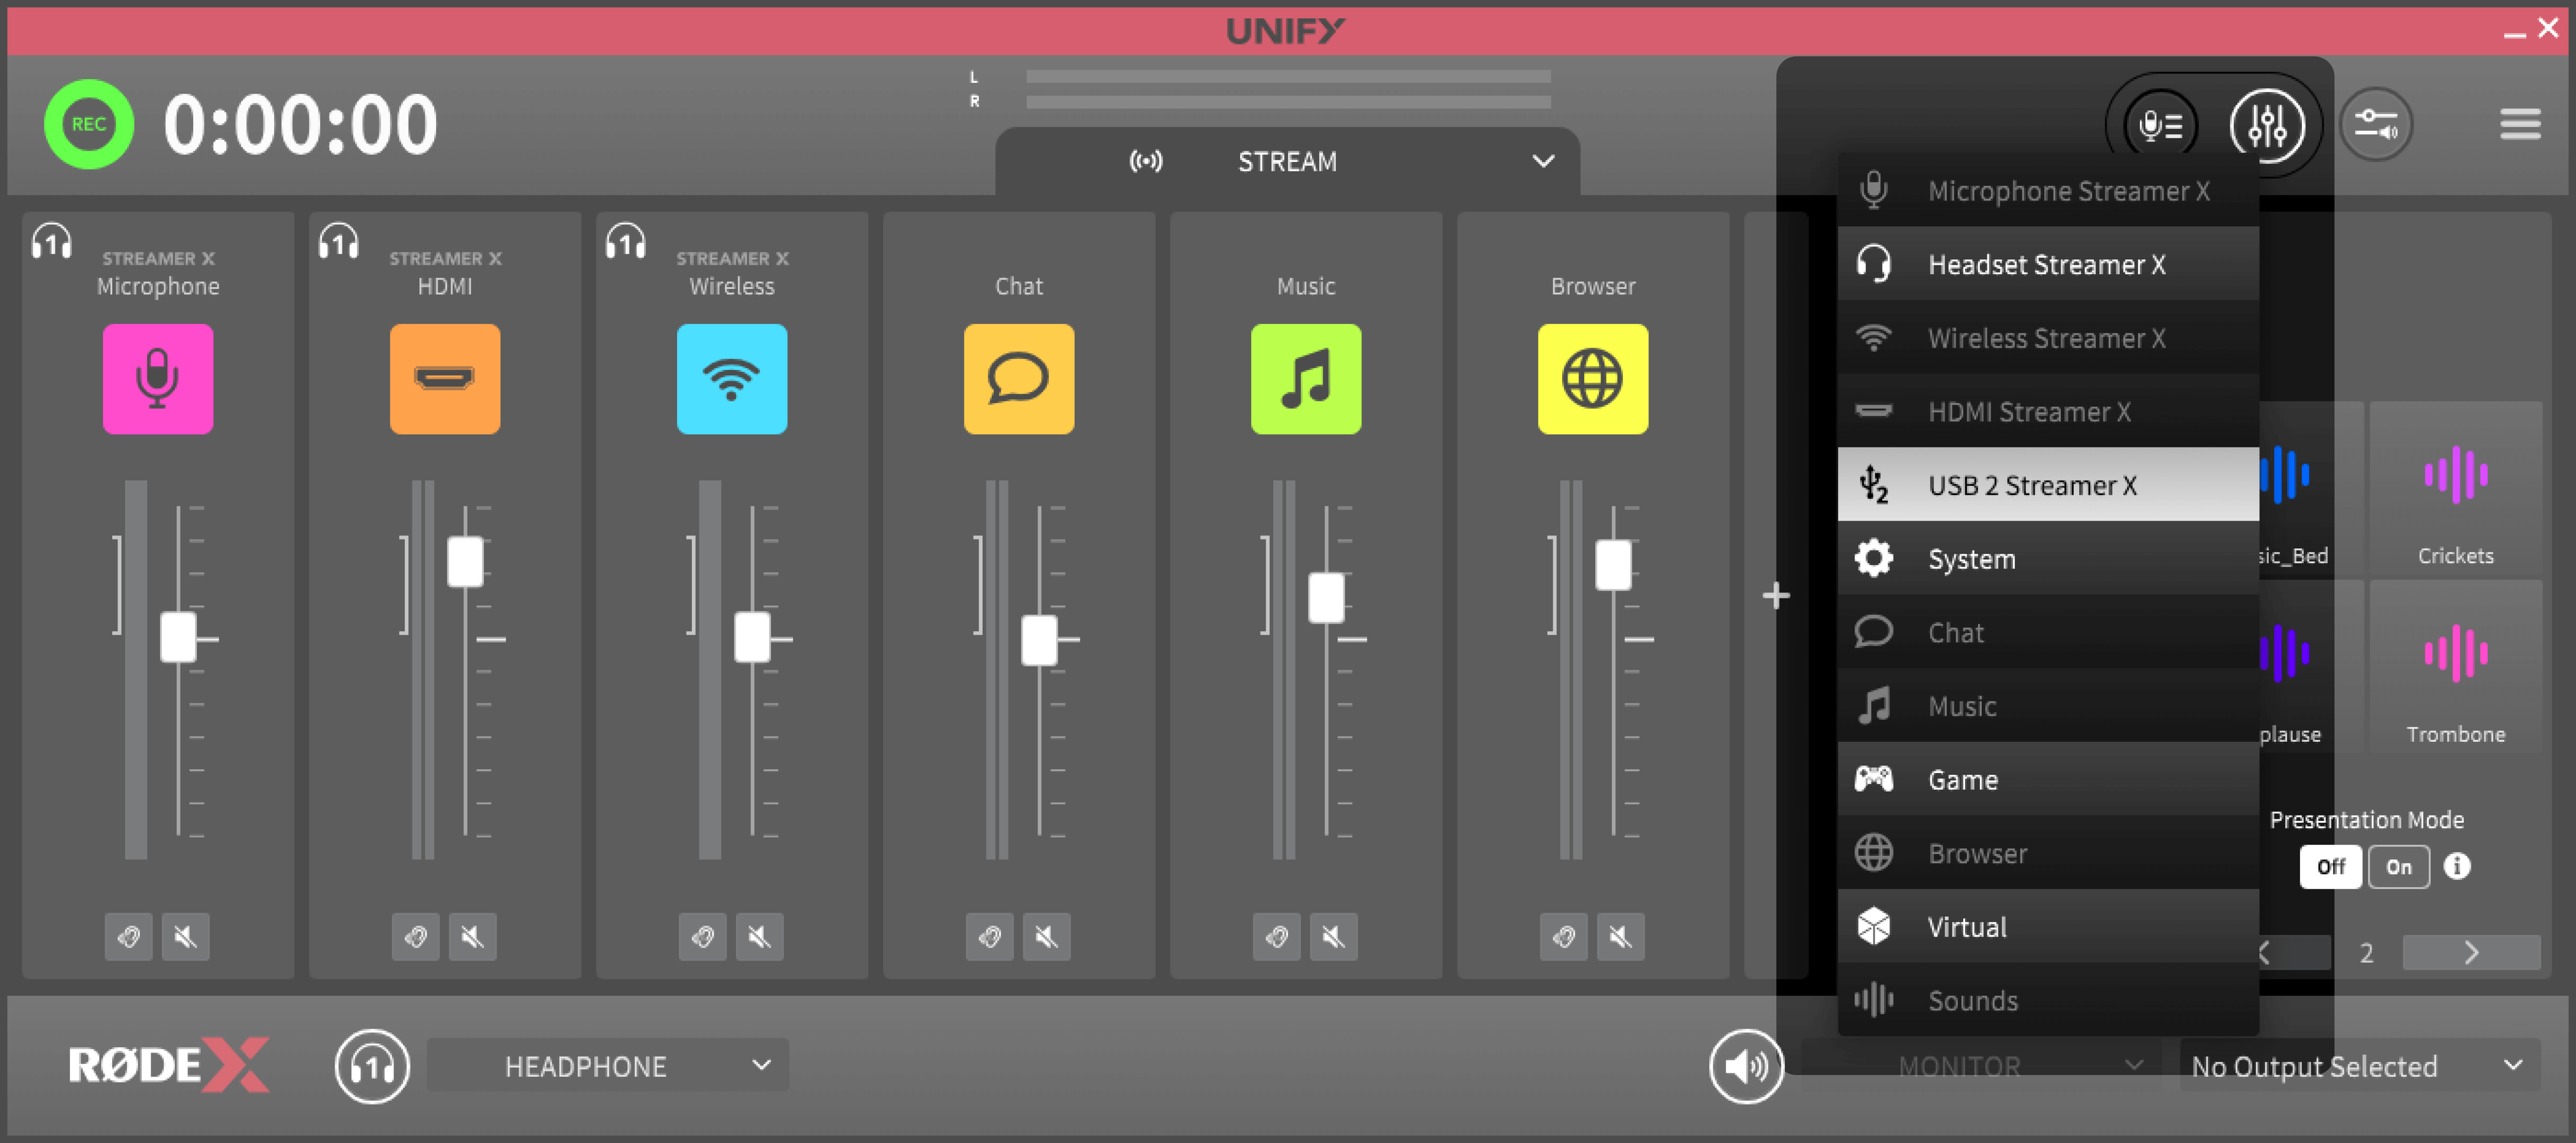 UNIFY input set to USB 2 Streamer X